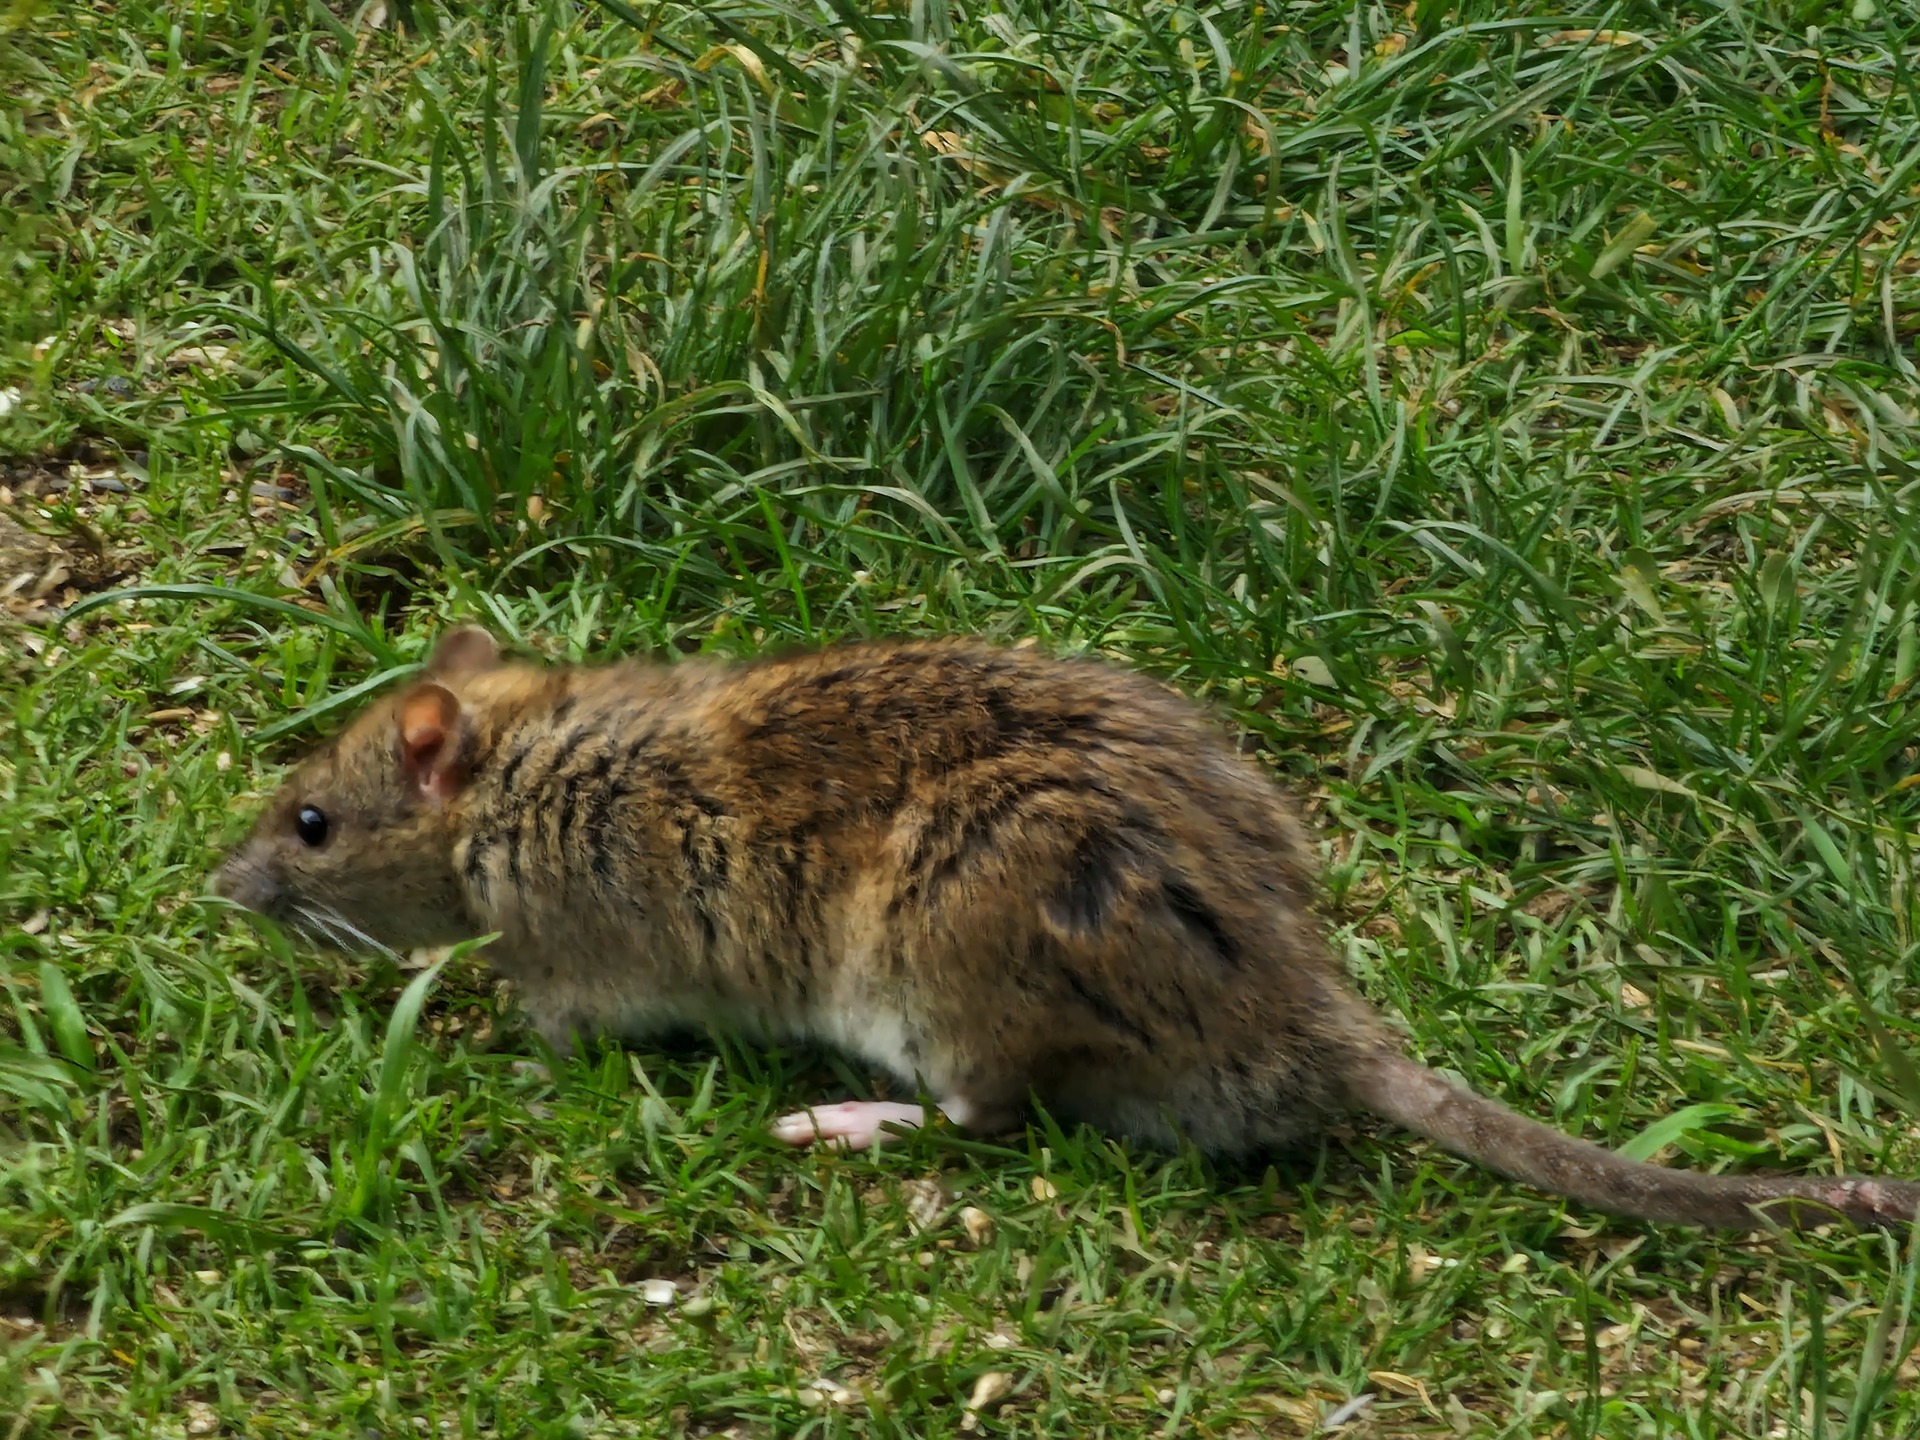 Rat sat on grass